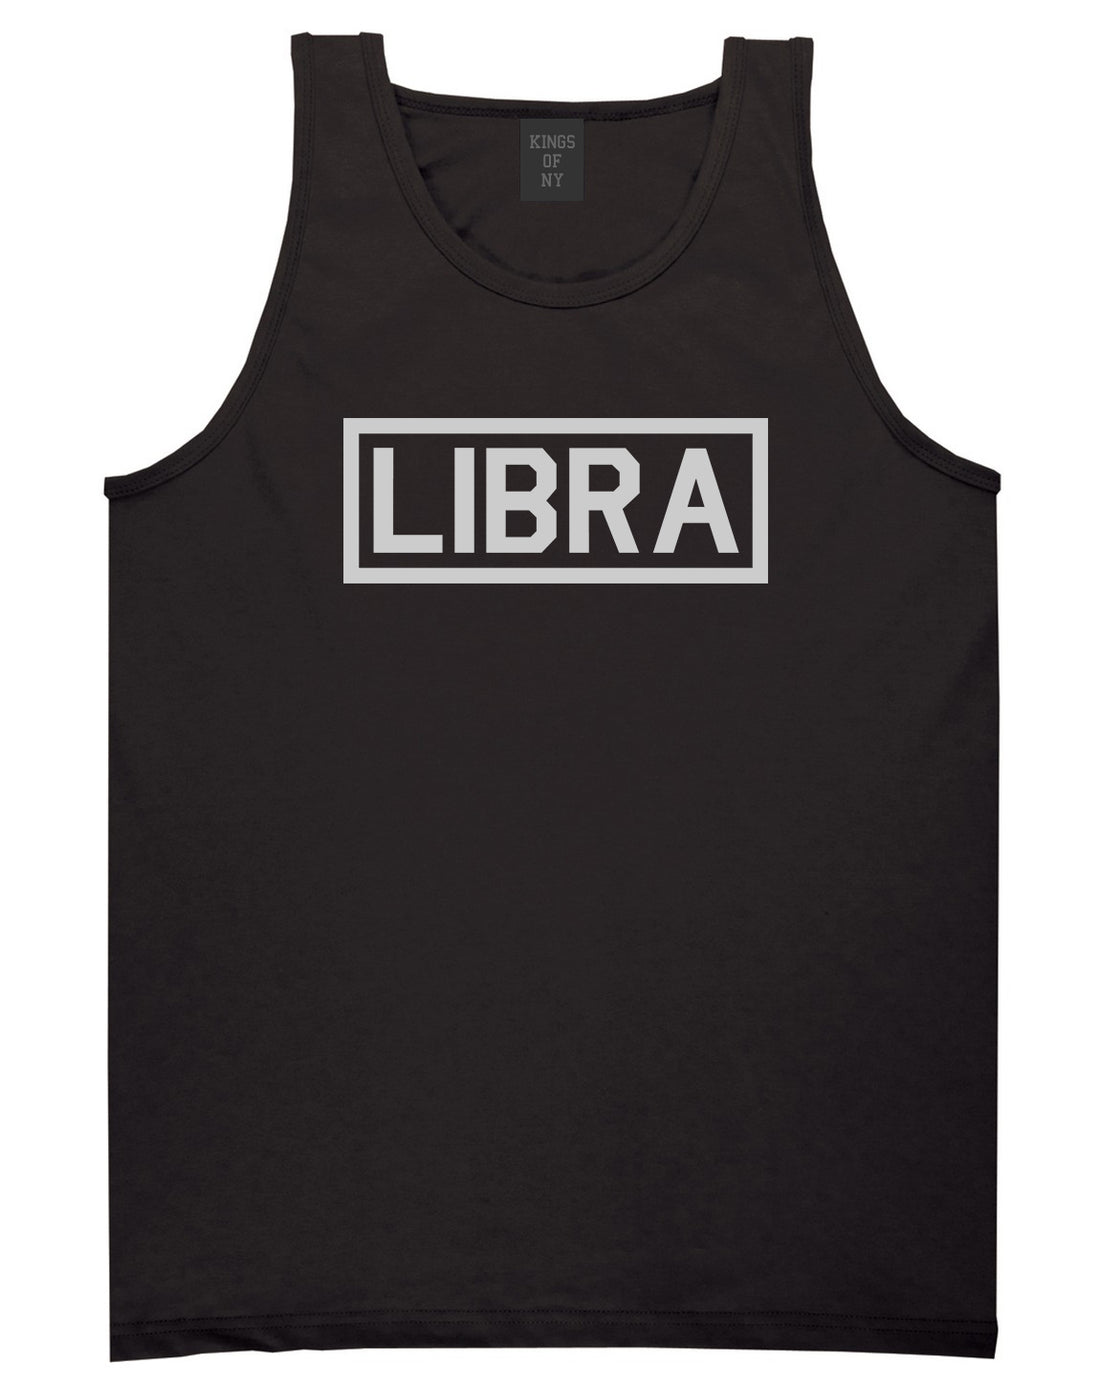 Libra Horoscope Sign Mens Black Tank Top Shirt by KINGS OF NY